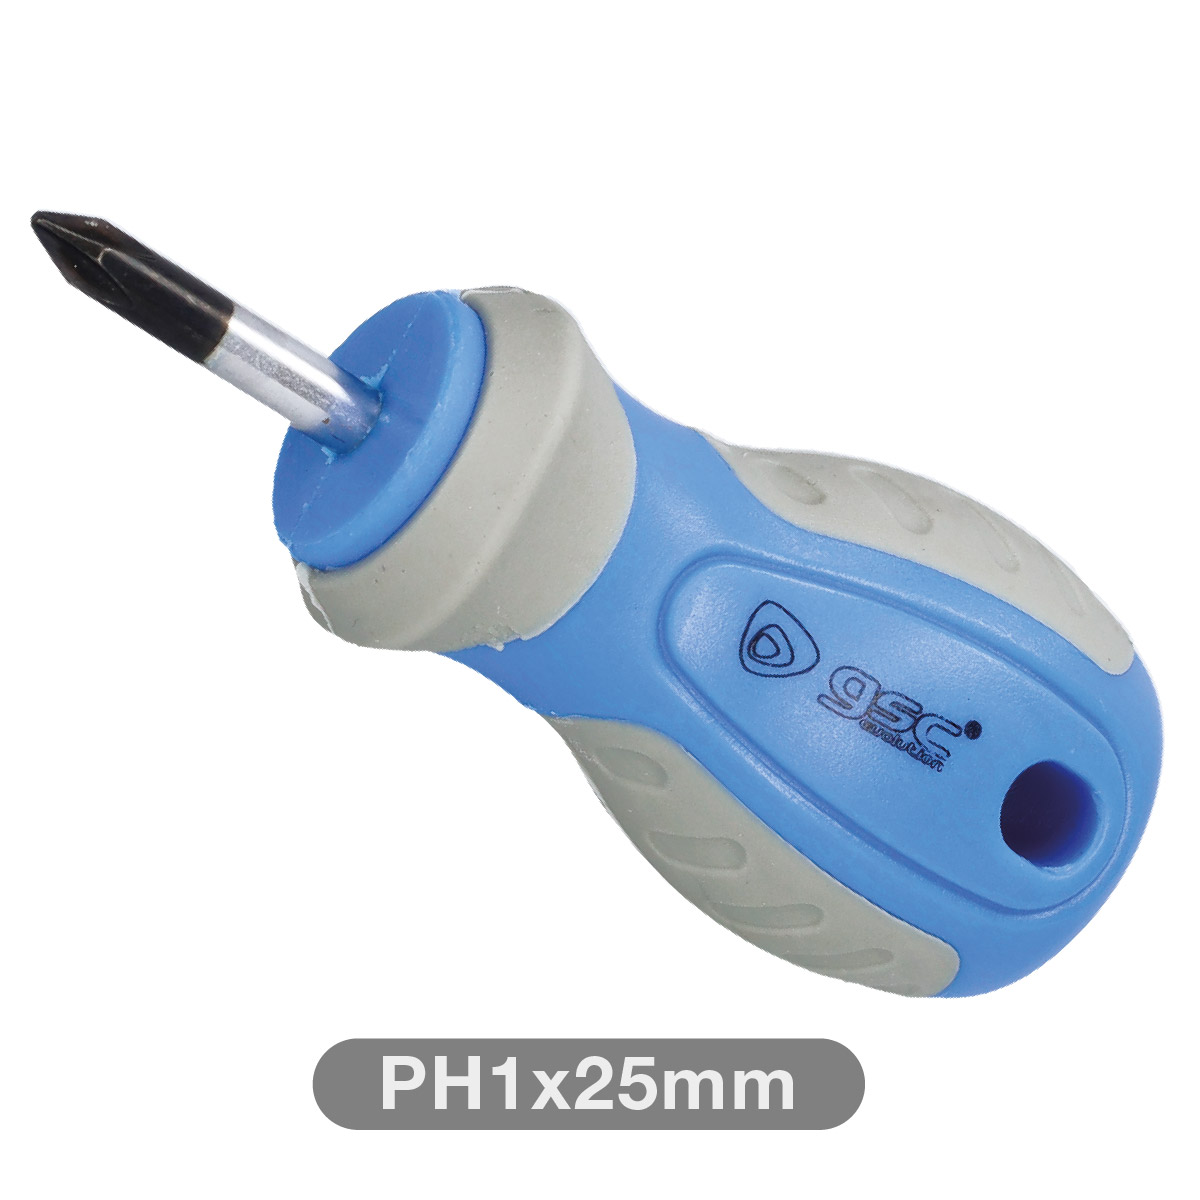 Philips Short screwdriver PH1x25mmm